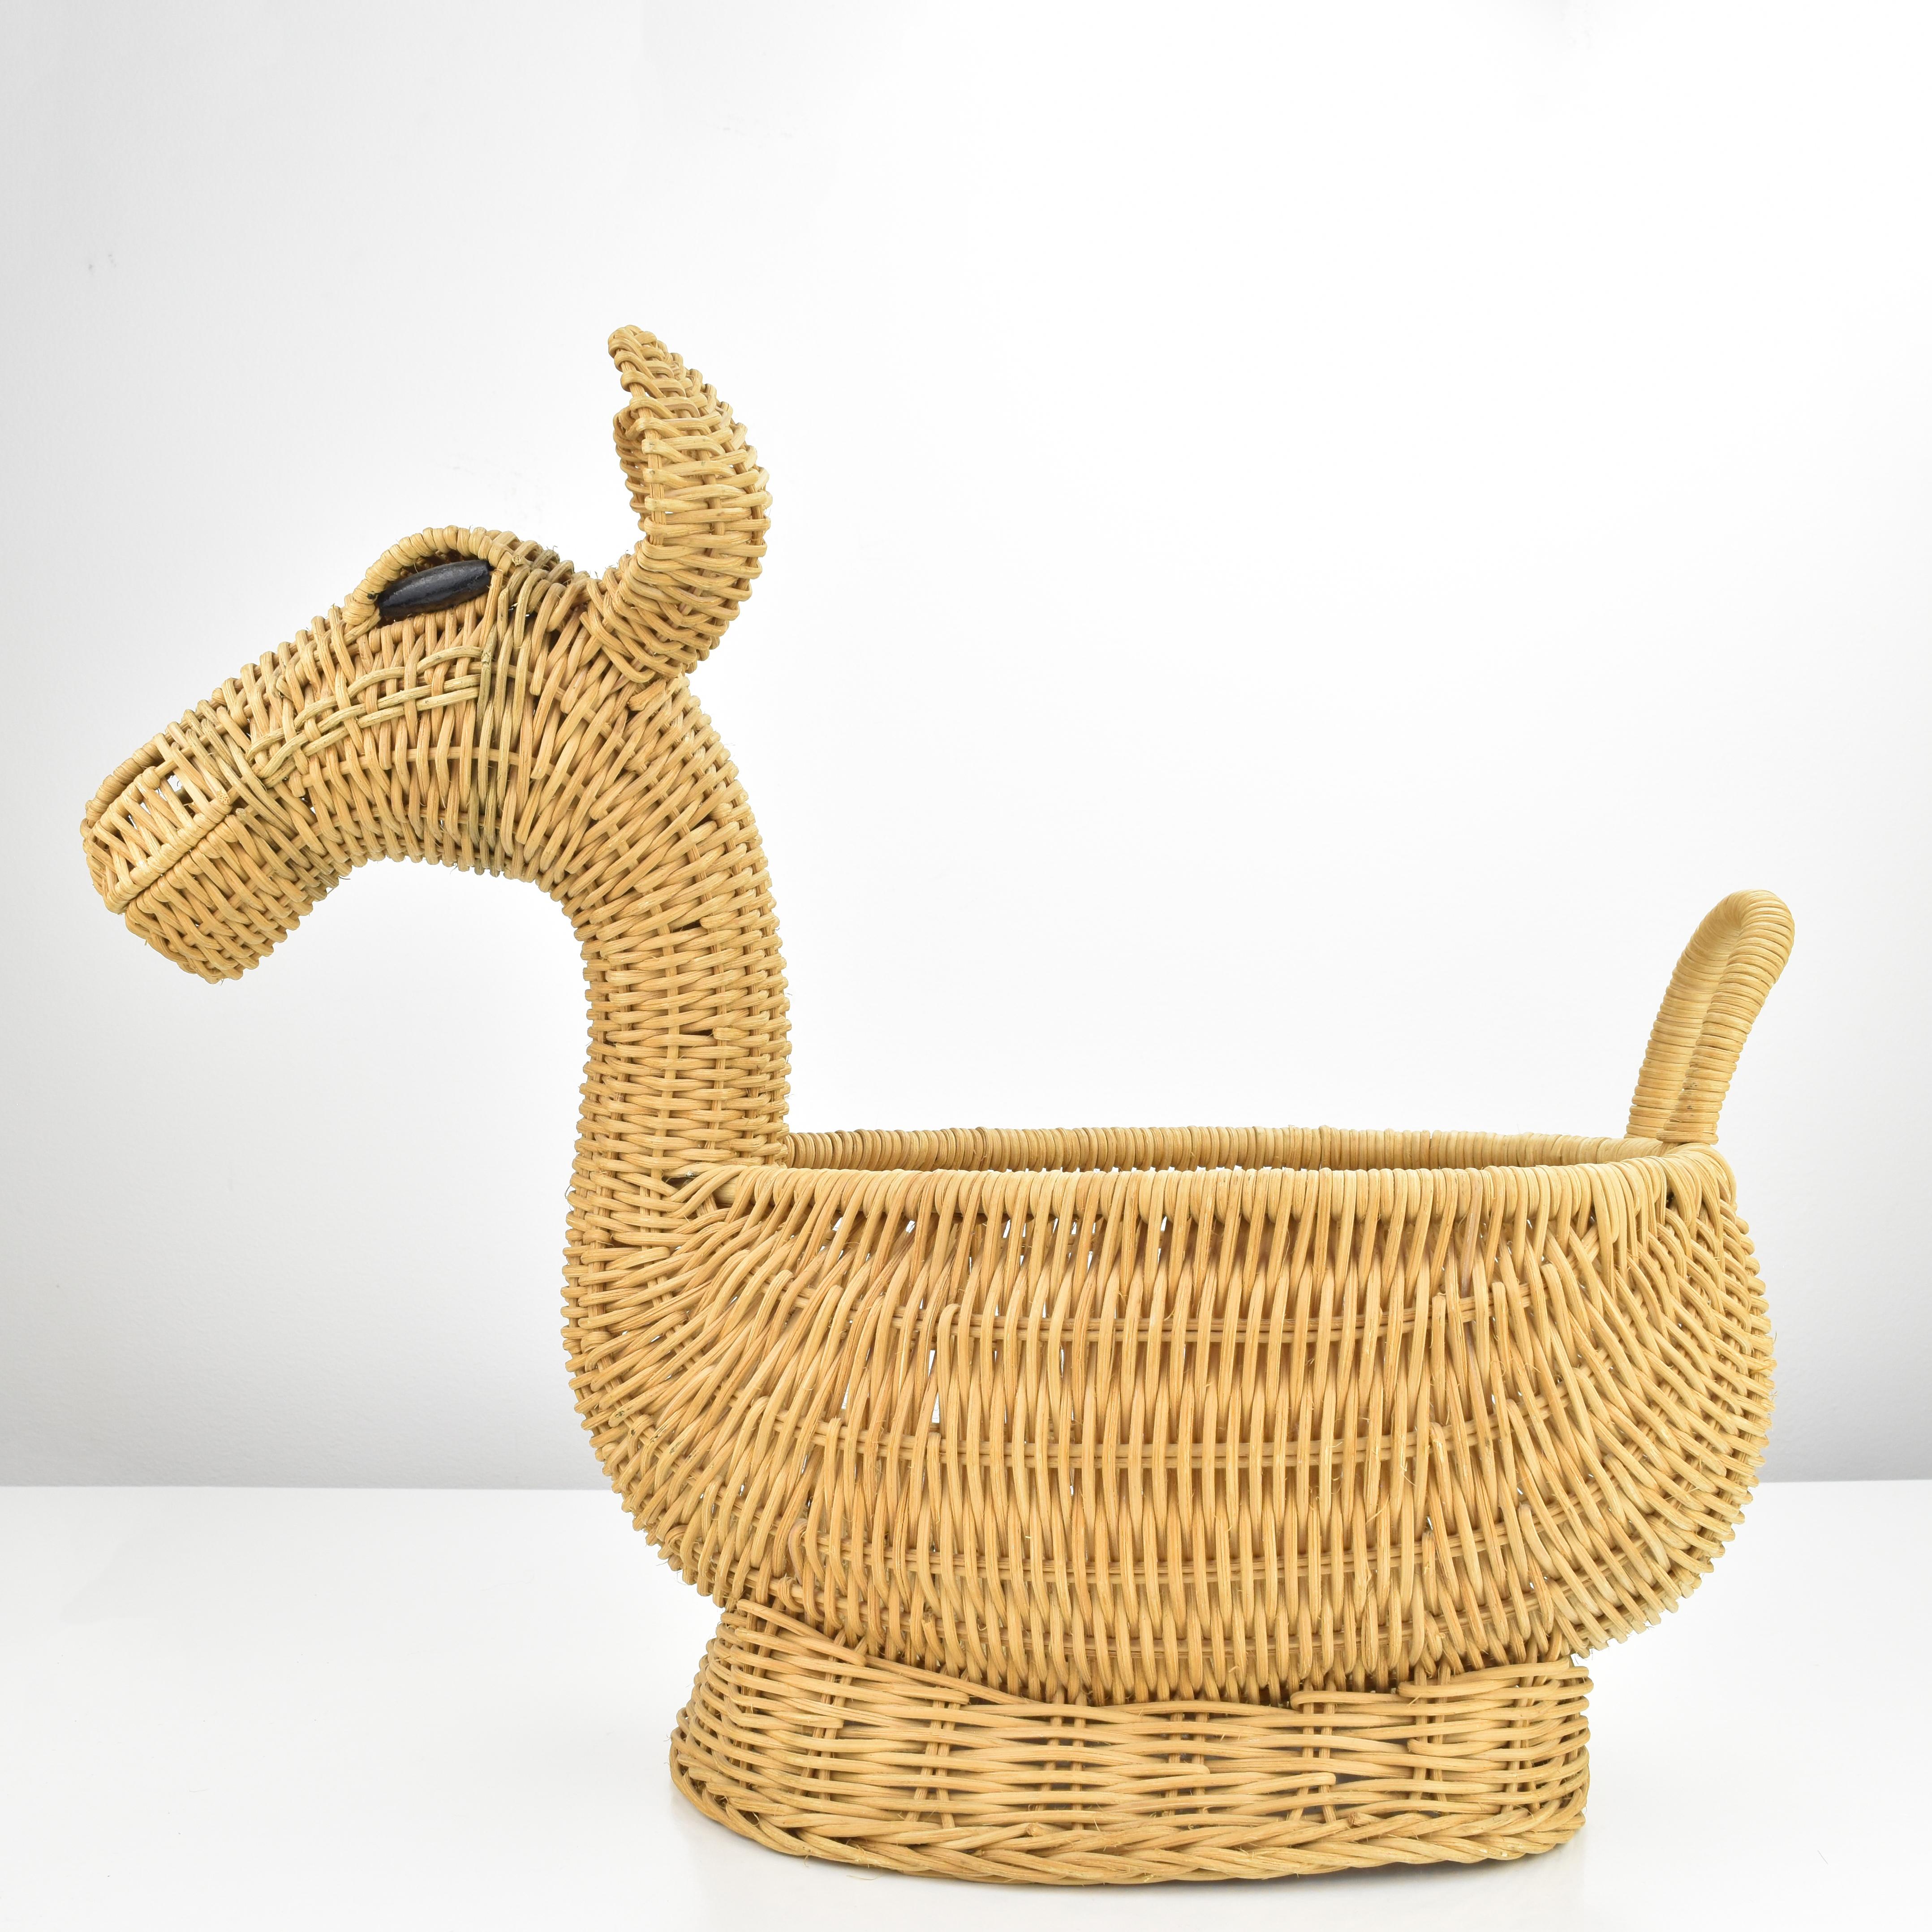 Sculptural French Wicker Rattan Cane Alpaca Fruit Basket Bowl MCM Boho Tiki For Sale 2